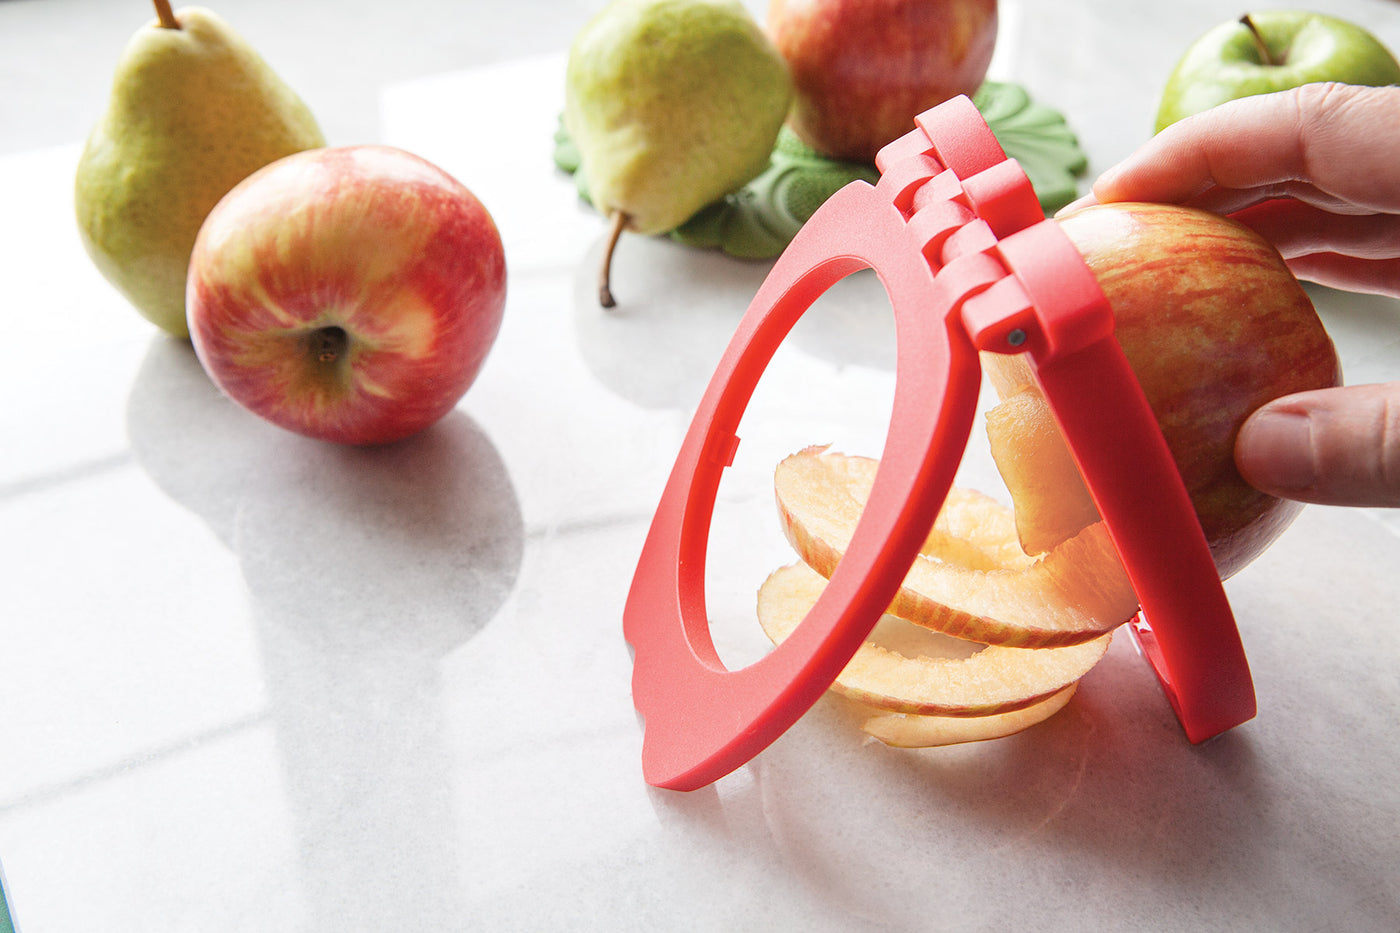 Apple Cookie Cutter/Dishwasher Safe